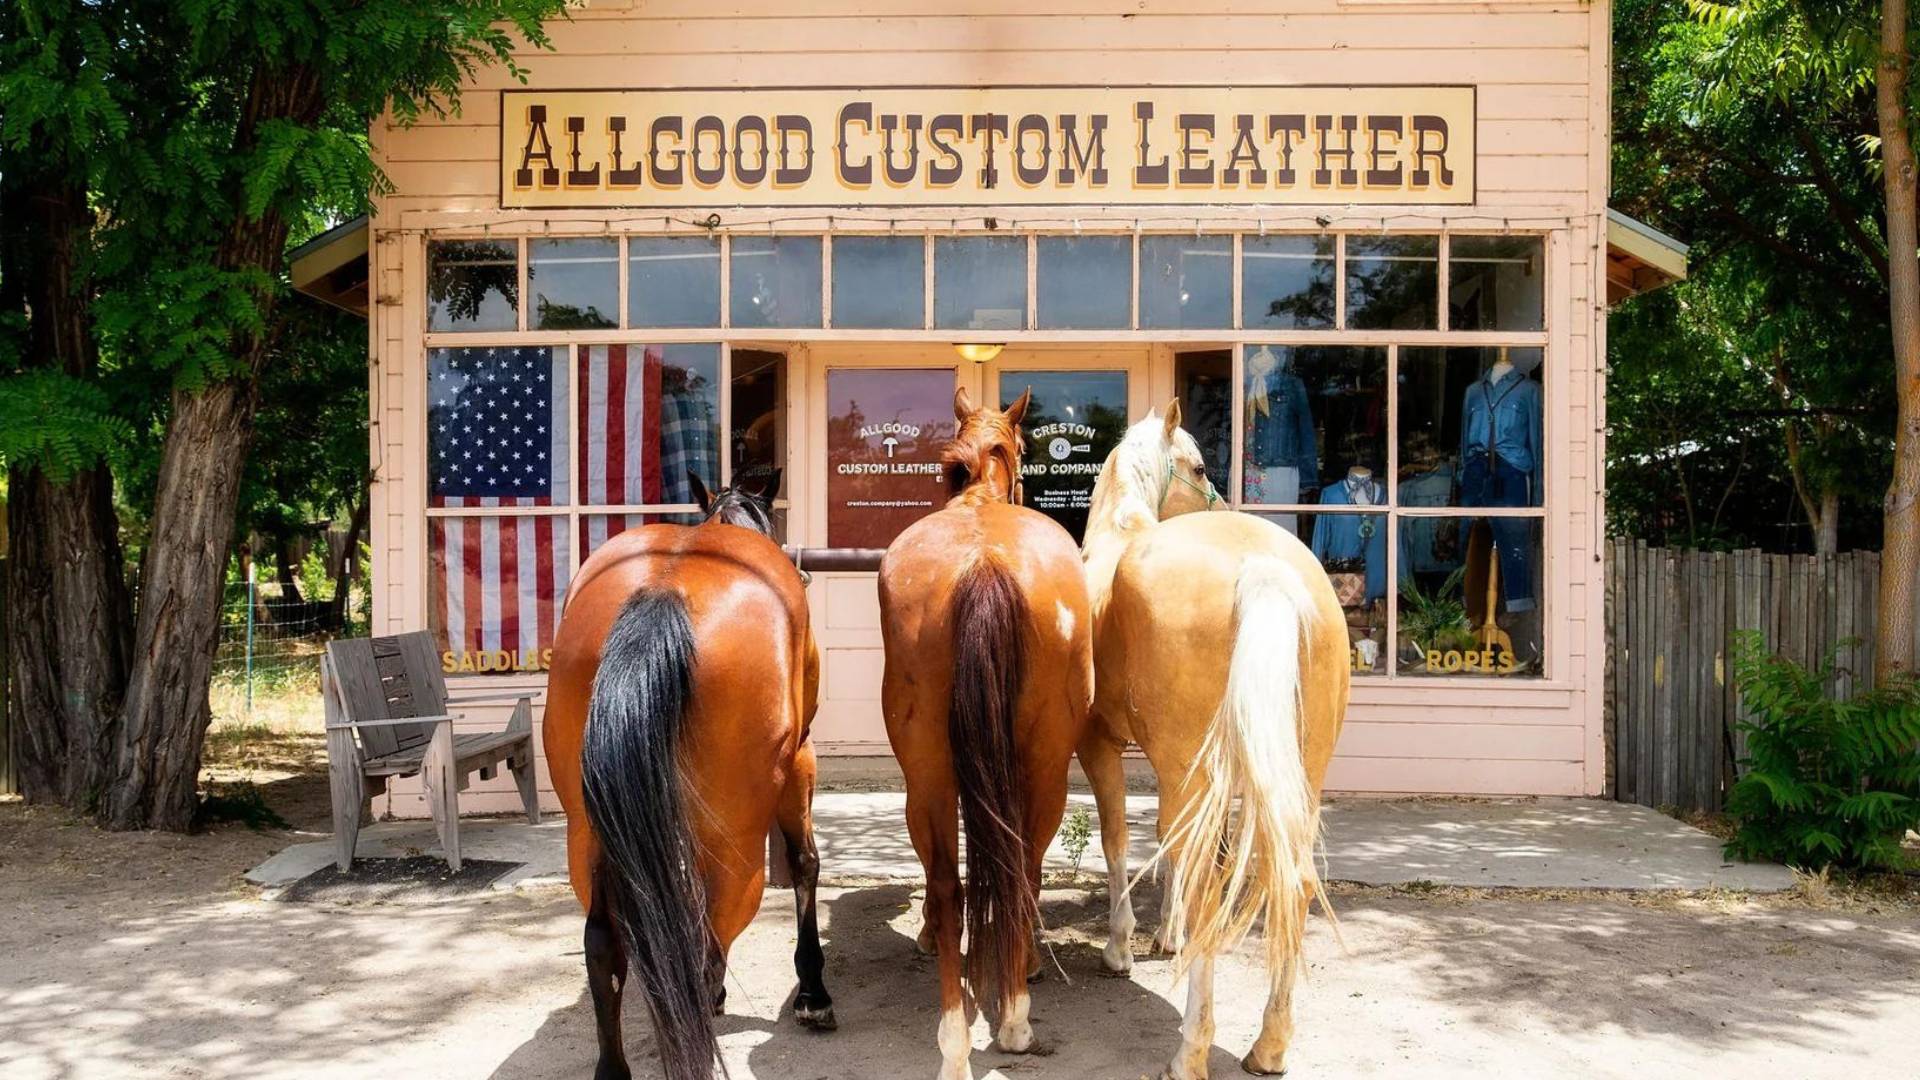 Allgood Customer Leather